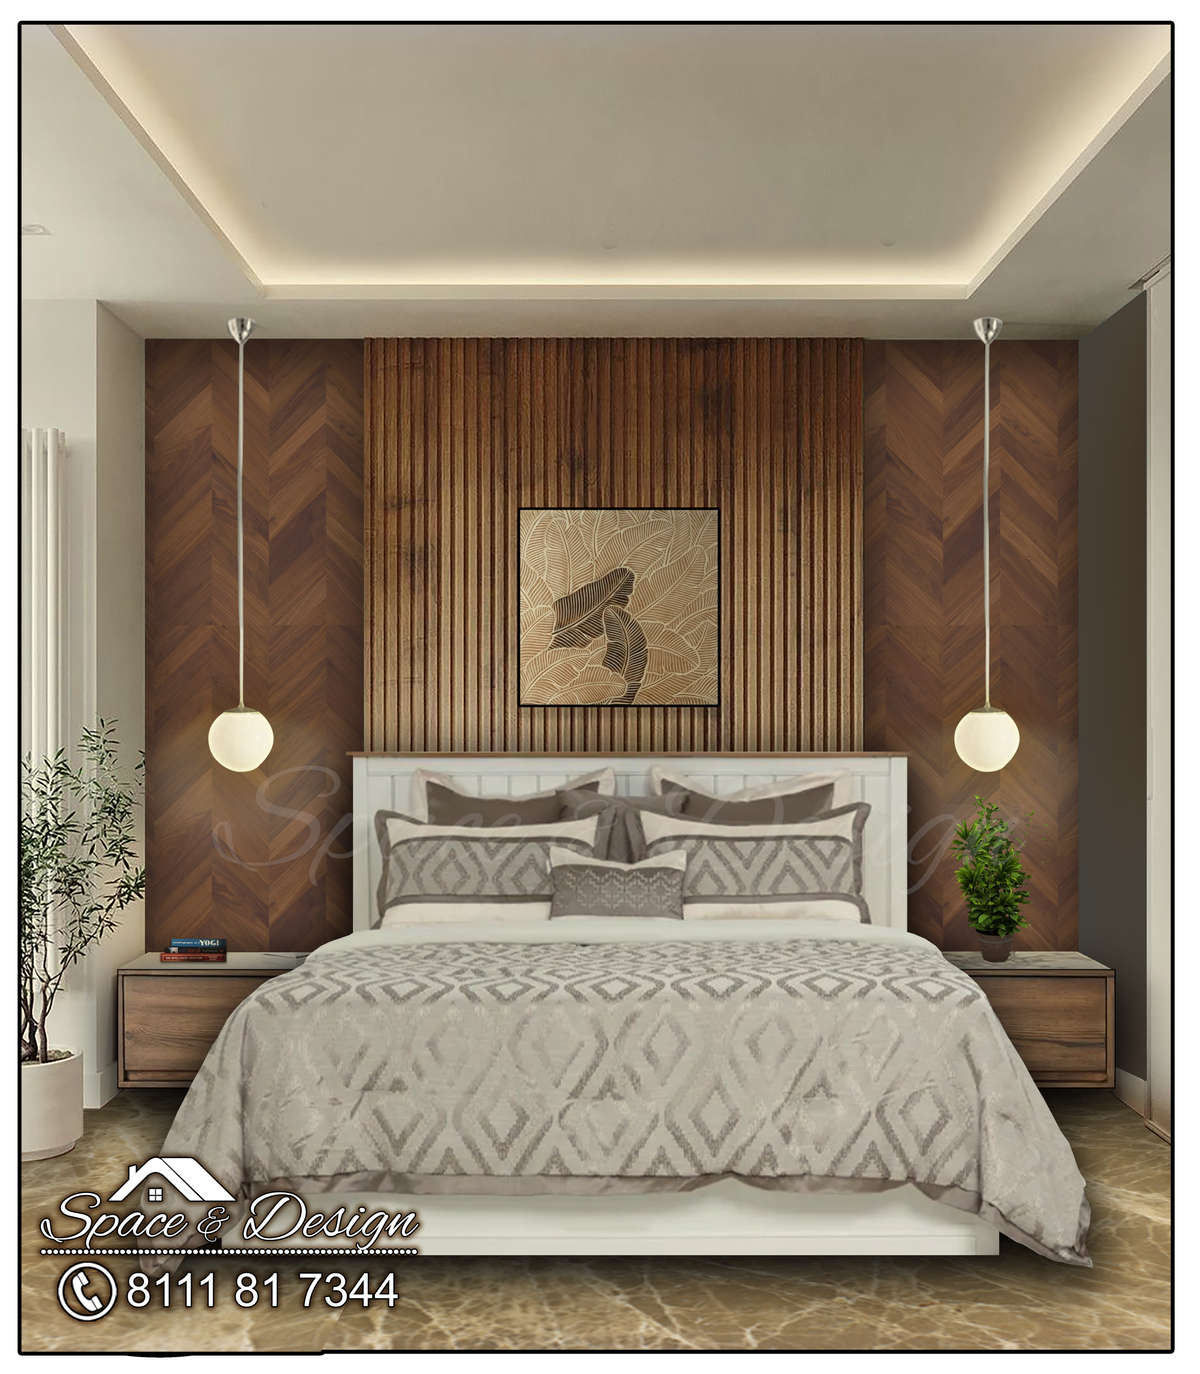 # Bed Room Interior 02 #Space & Design